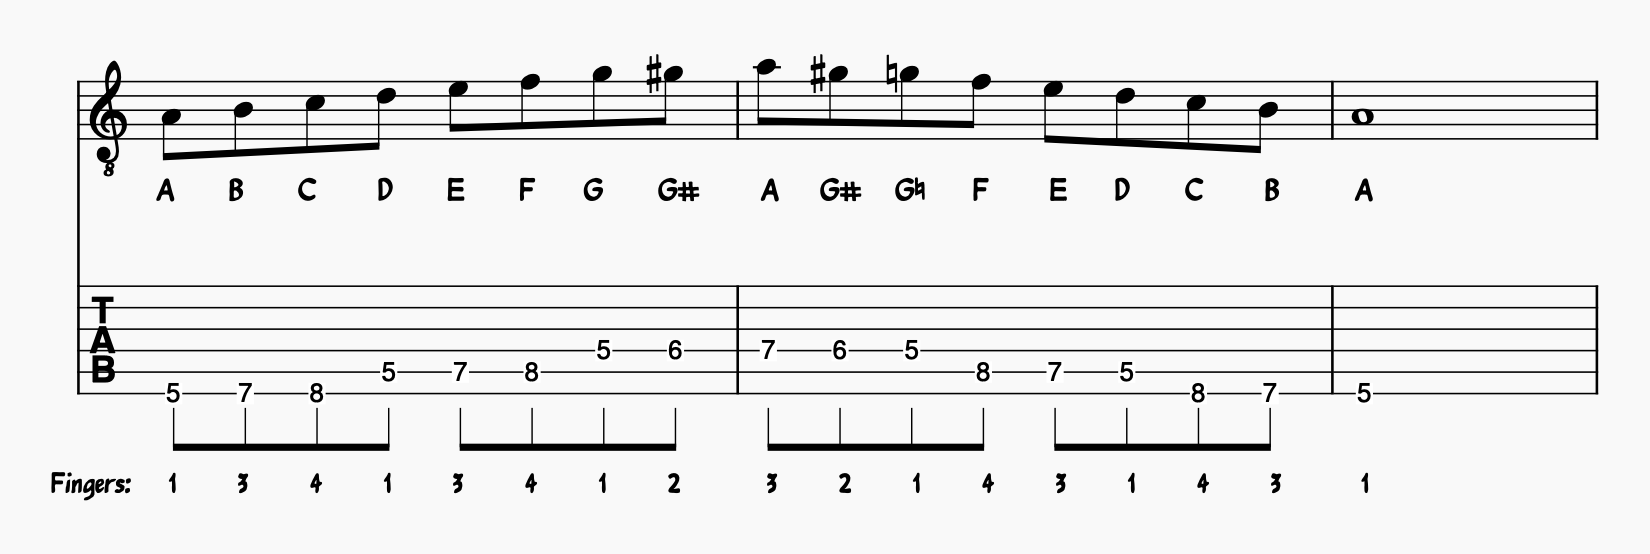 Bebop harmonic minor scale in A